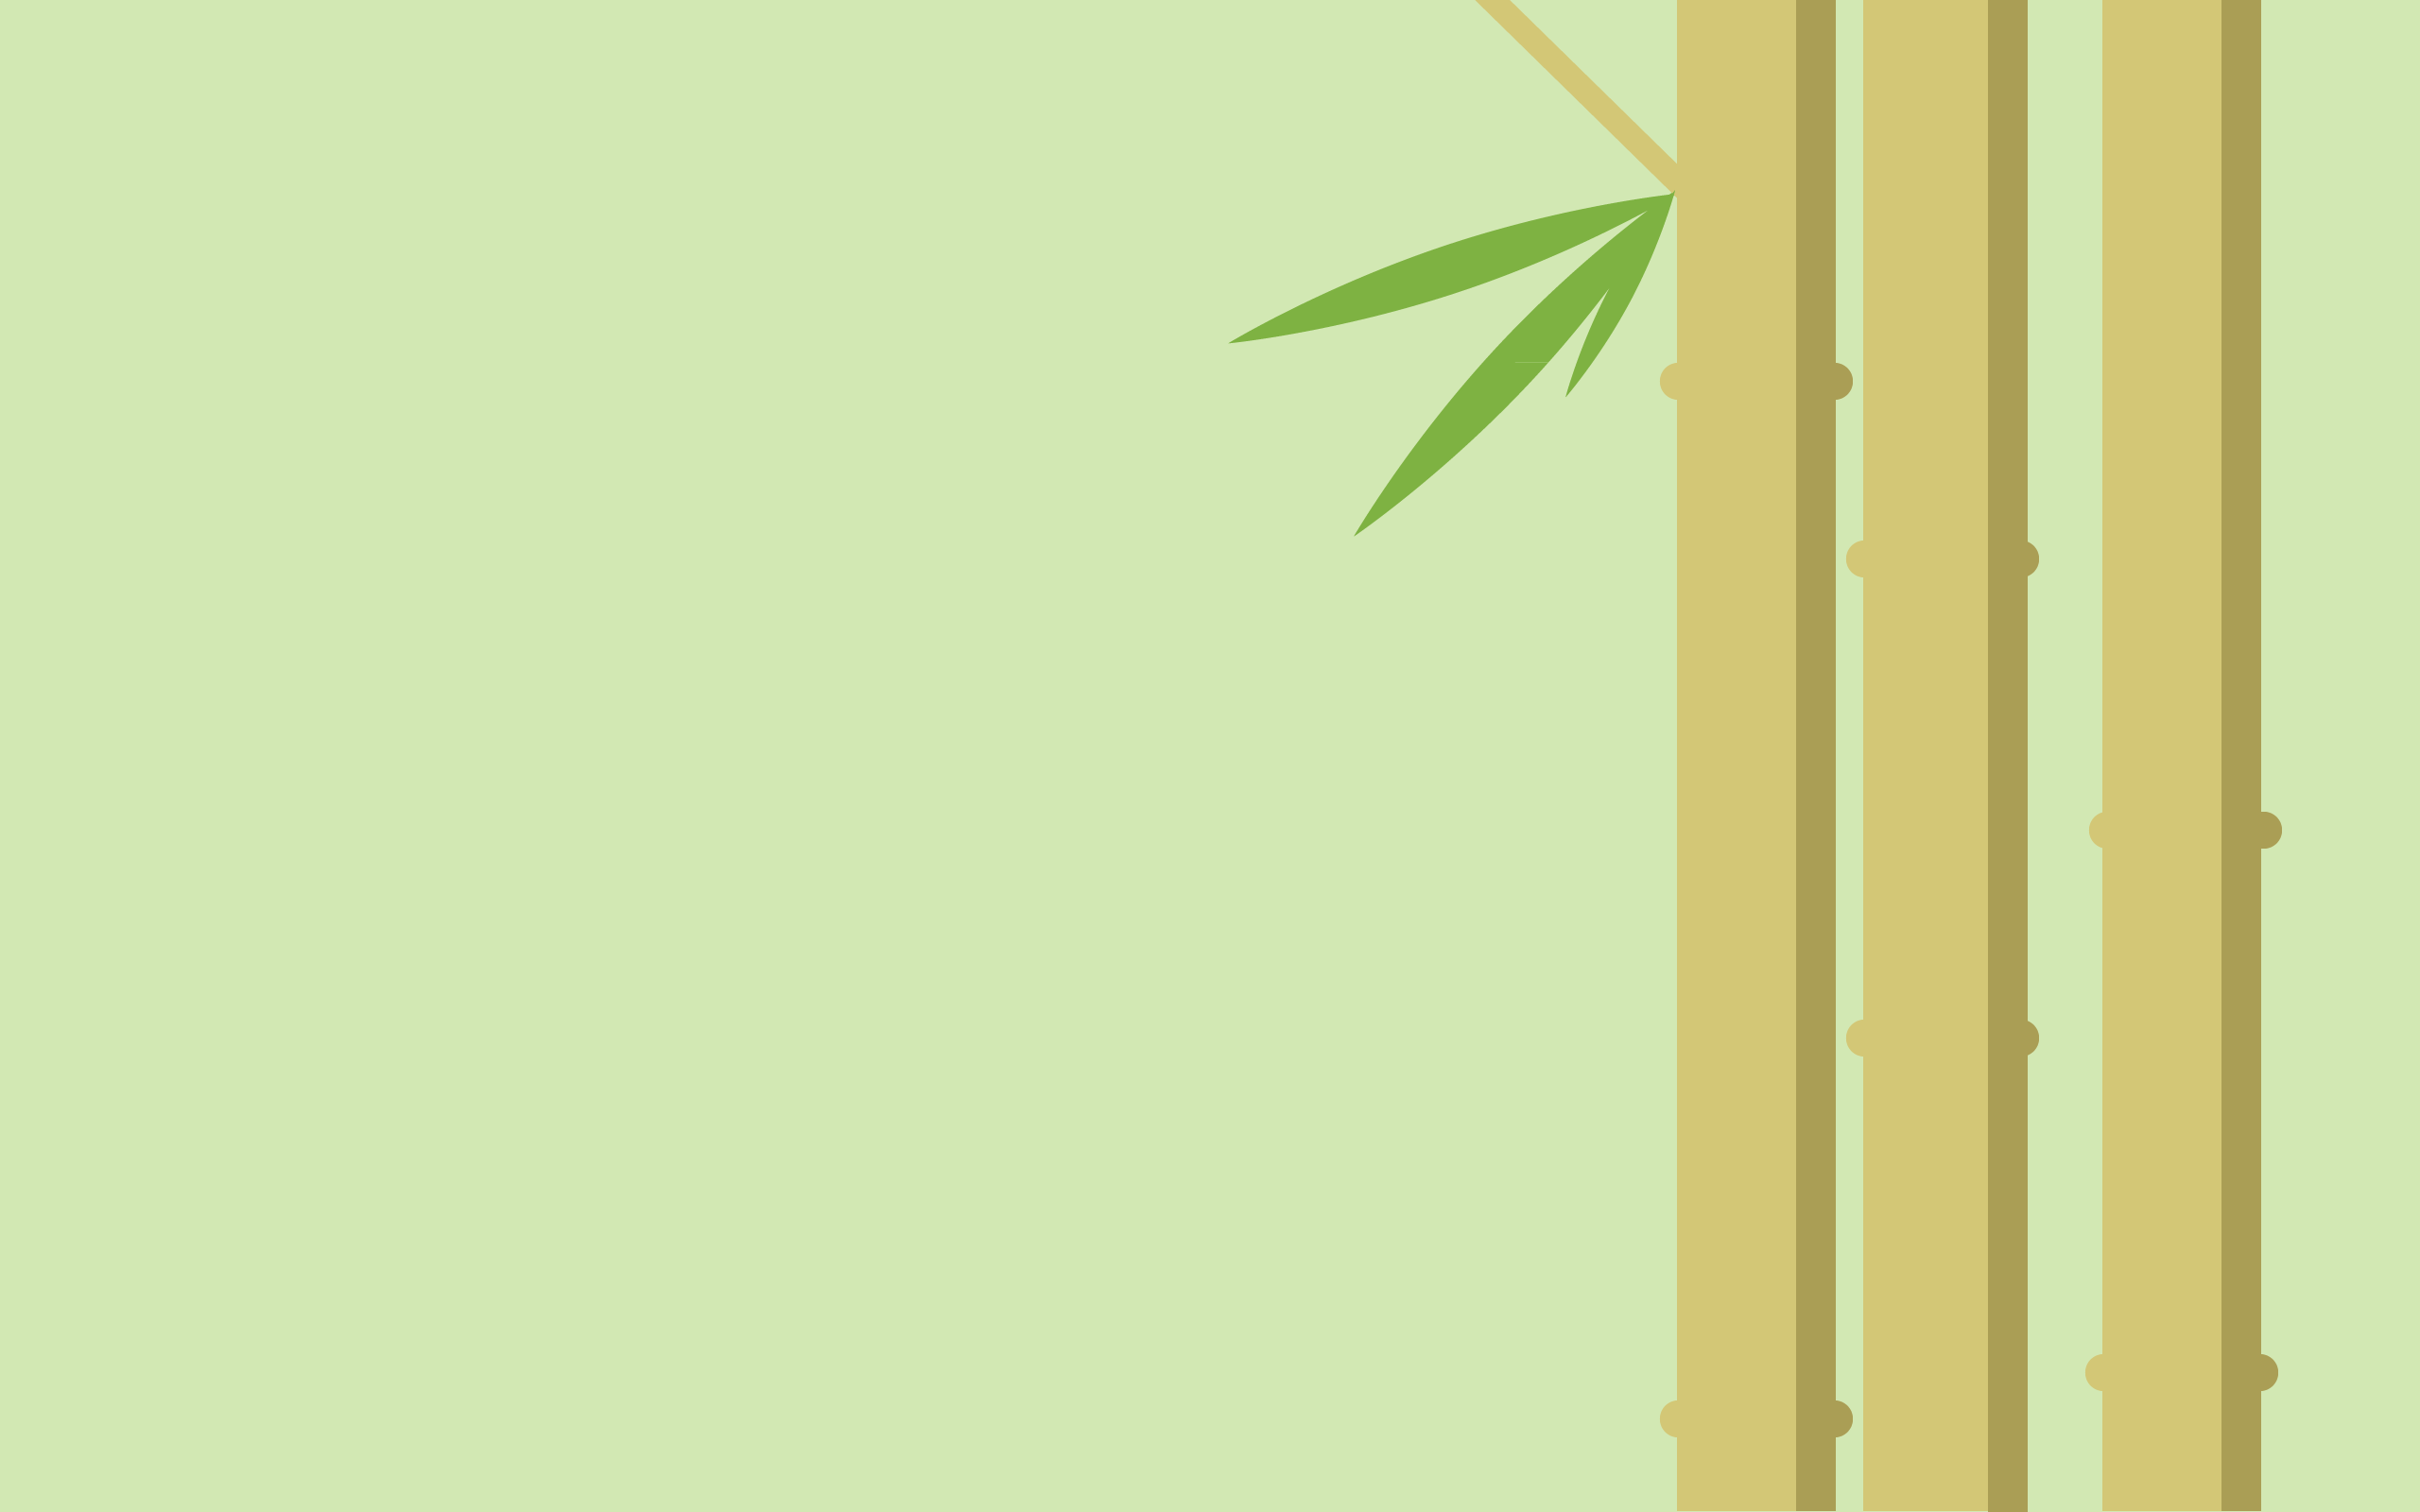 General 2560x1600 minimalism bamboo digital art simple background plants artwork